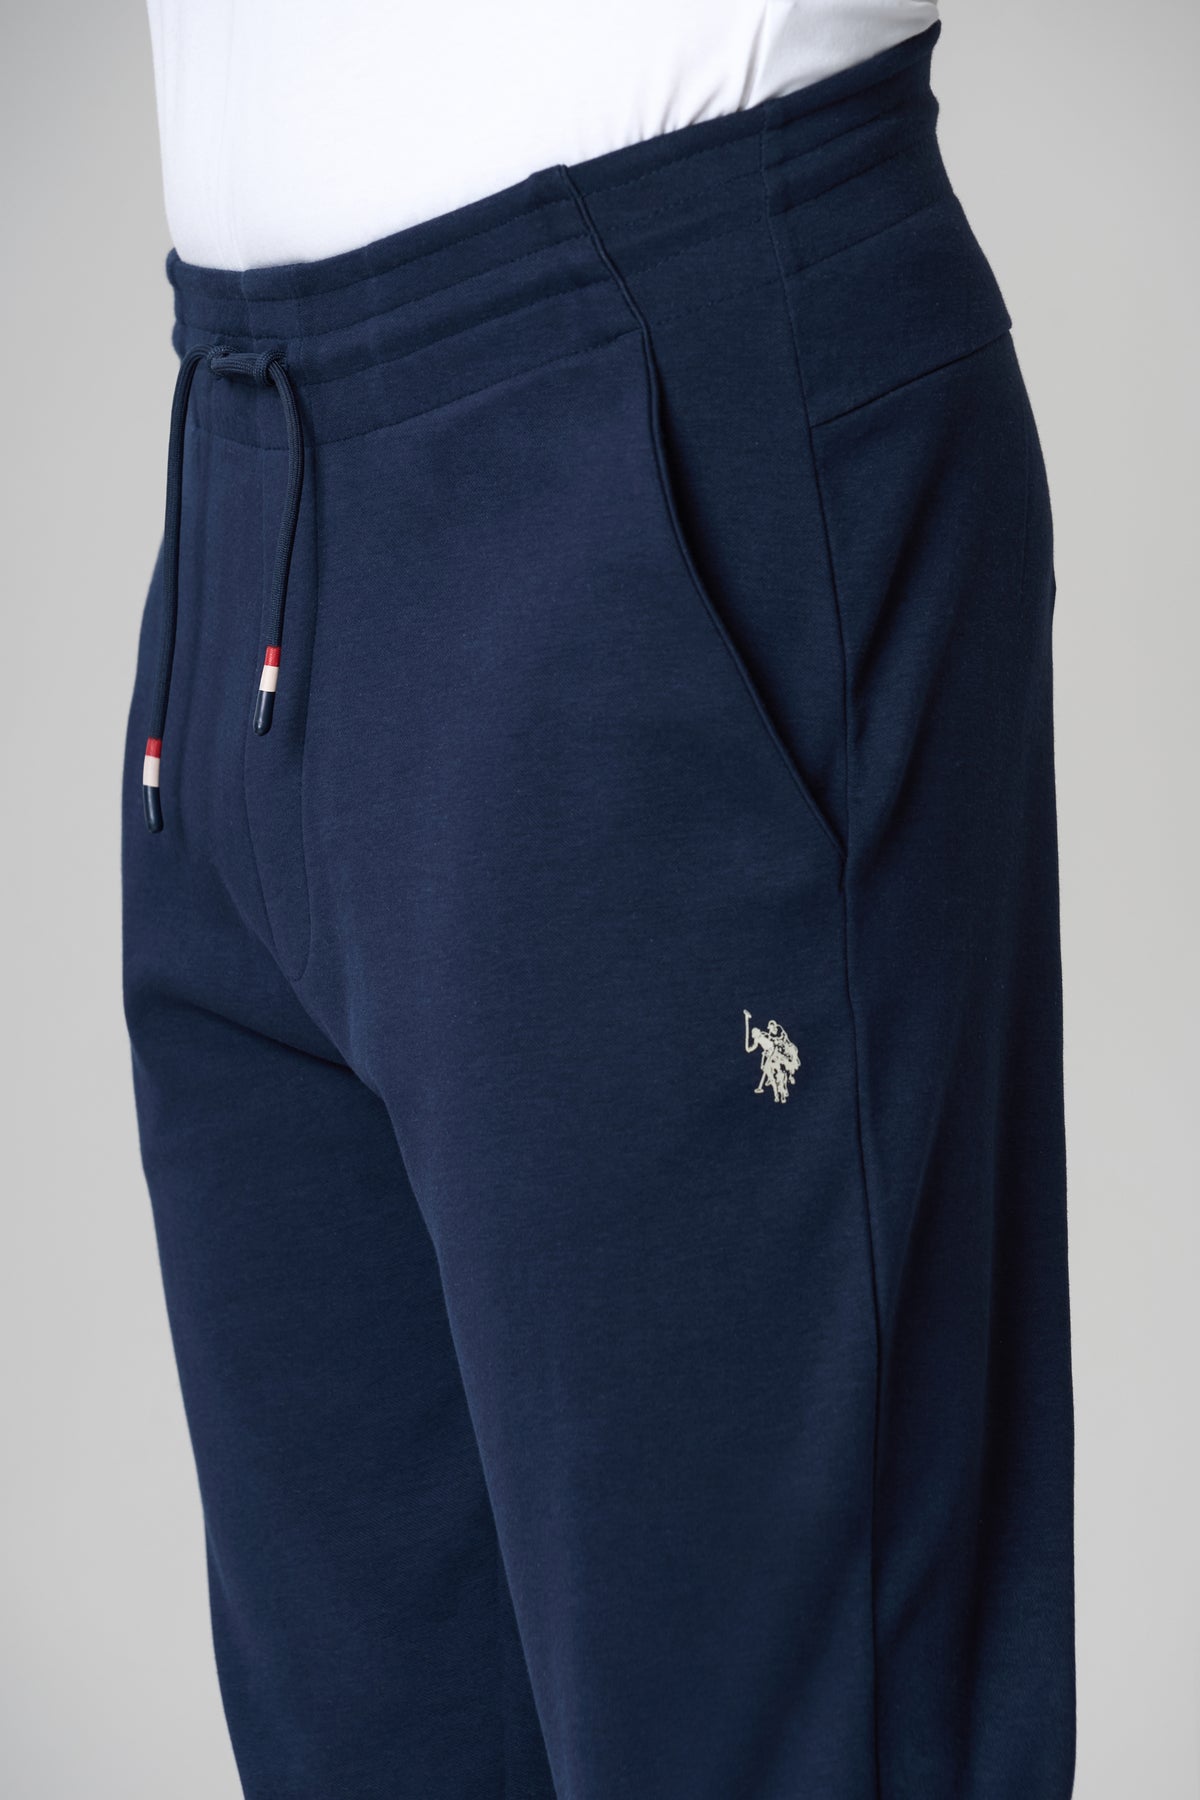 Pantalone sportivo in cotone stretch premium quality